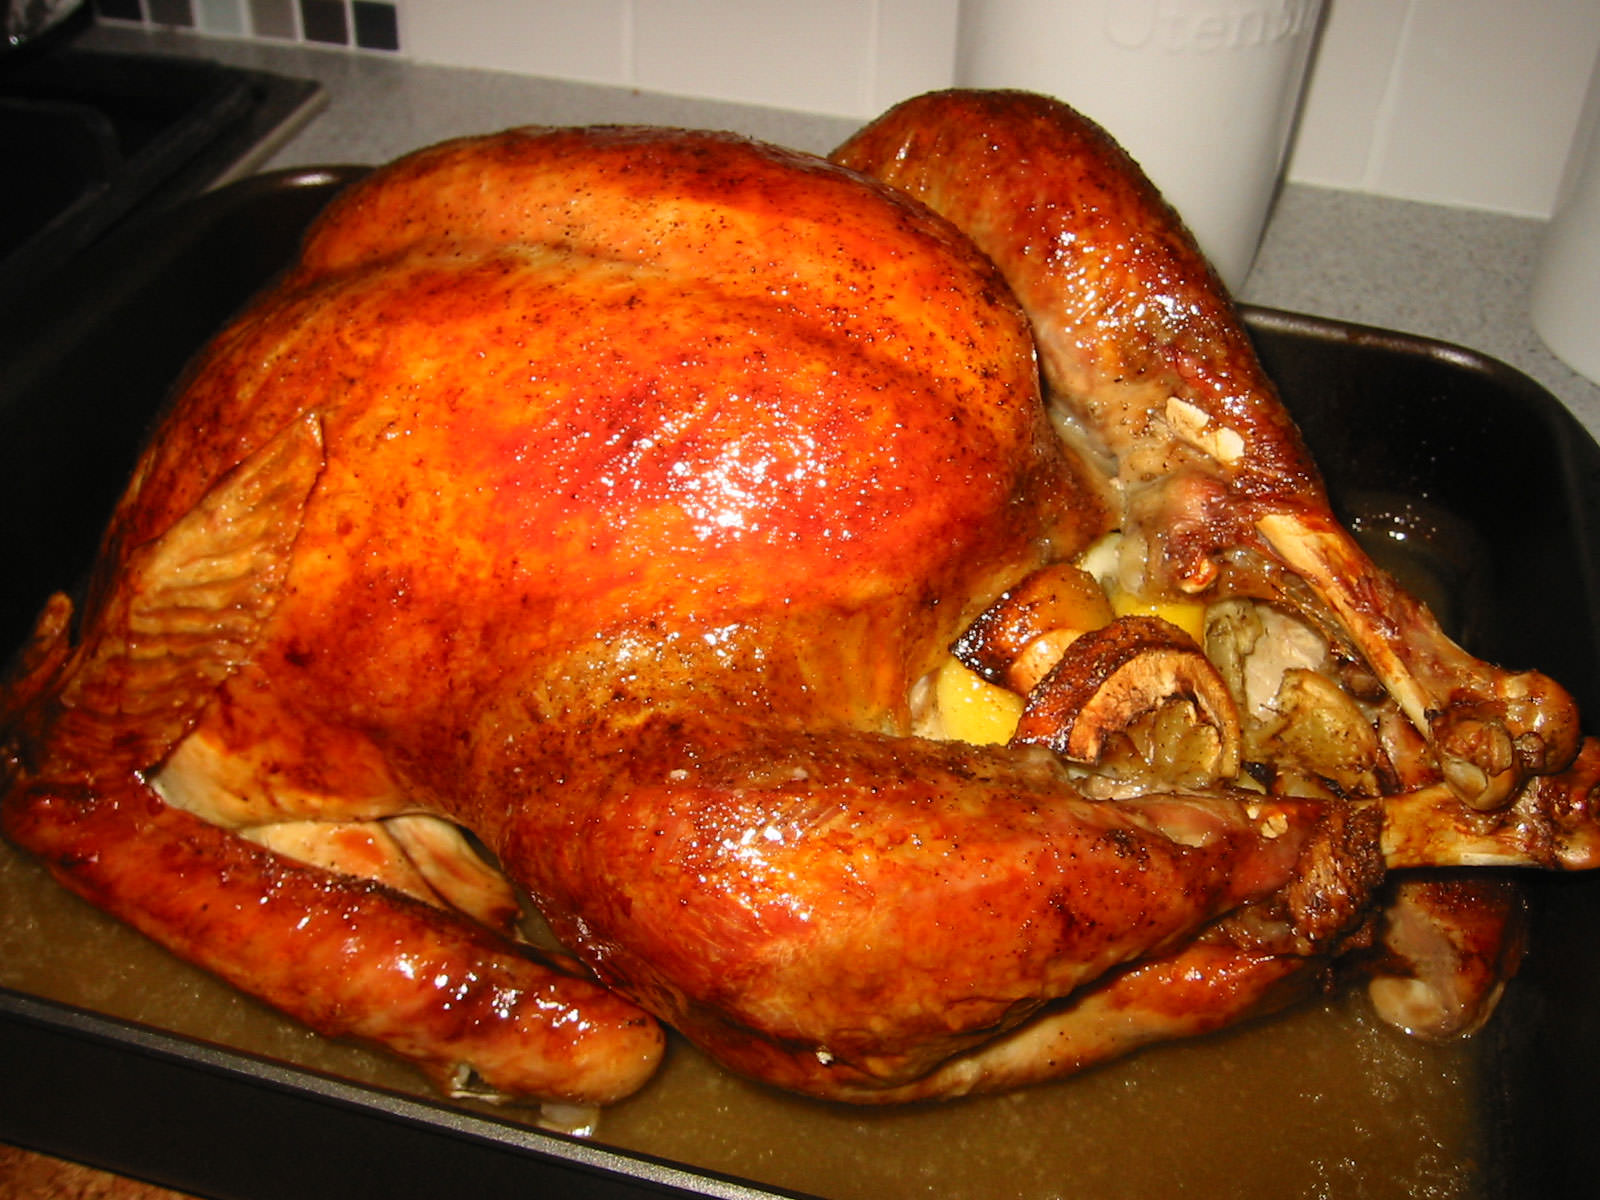 The turkey